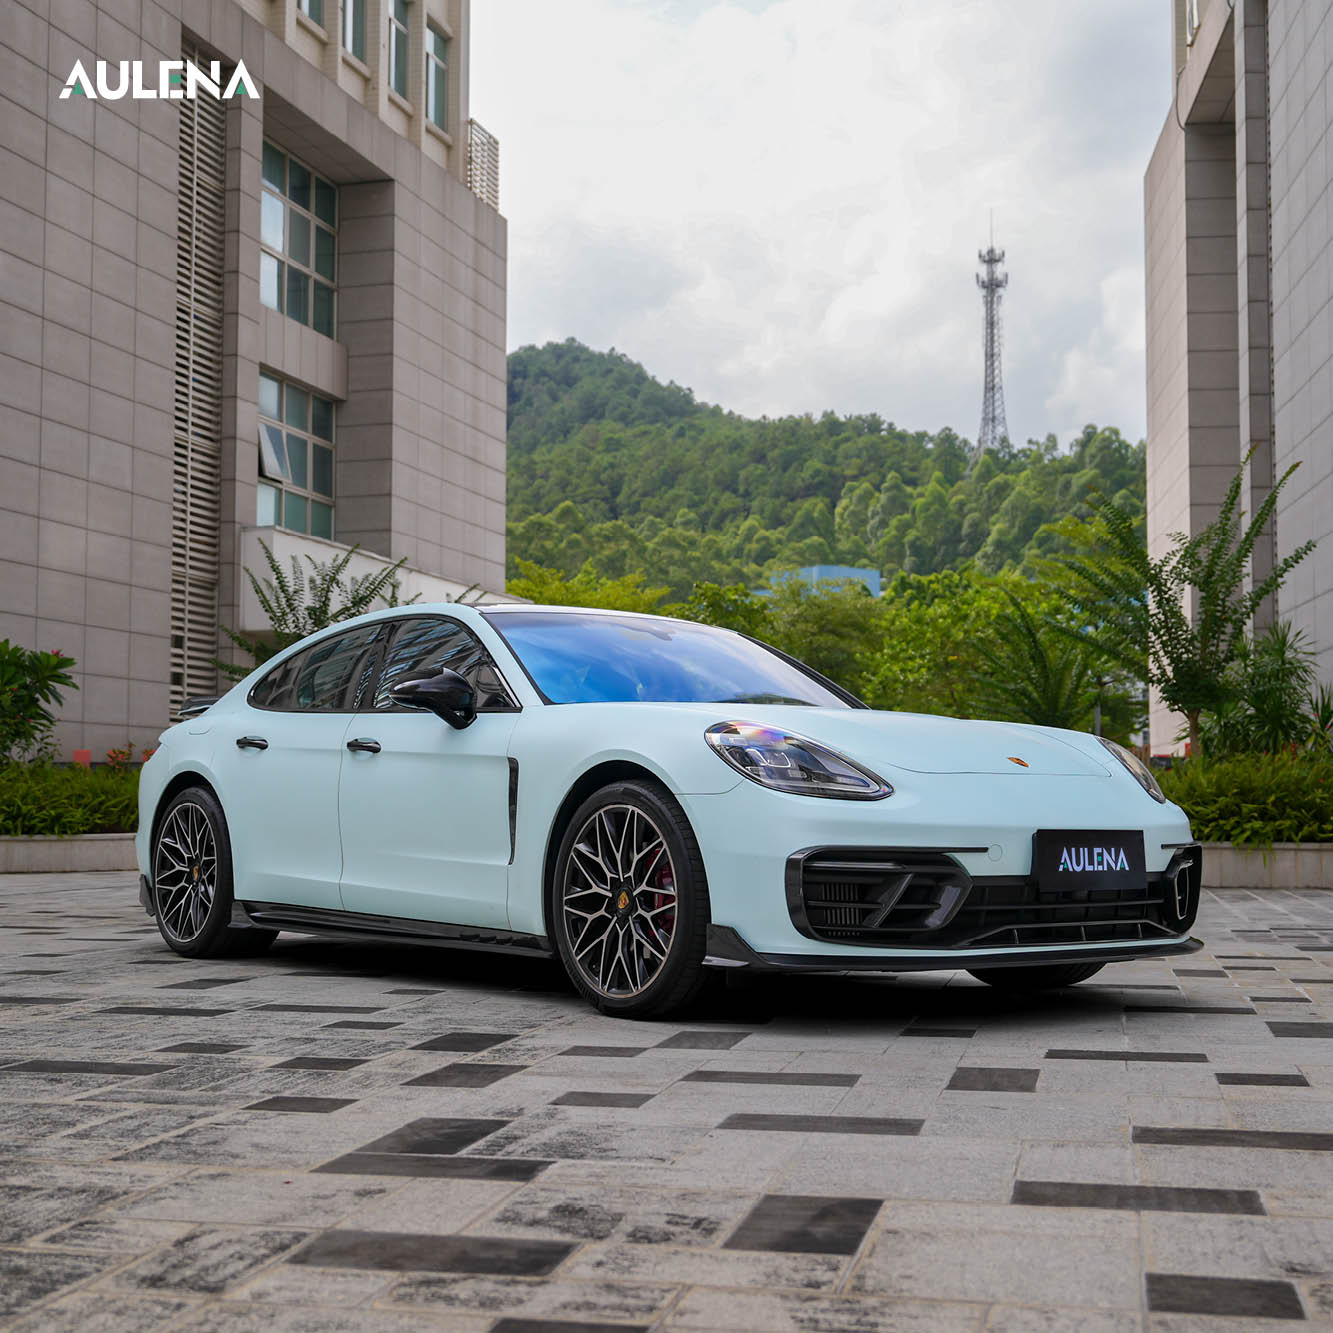 Porsche Palamela Aulena Design dry carbon performance body kit